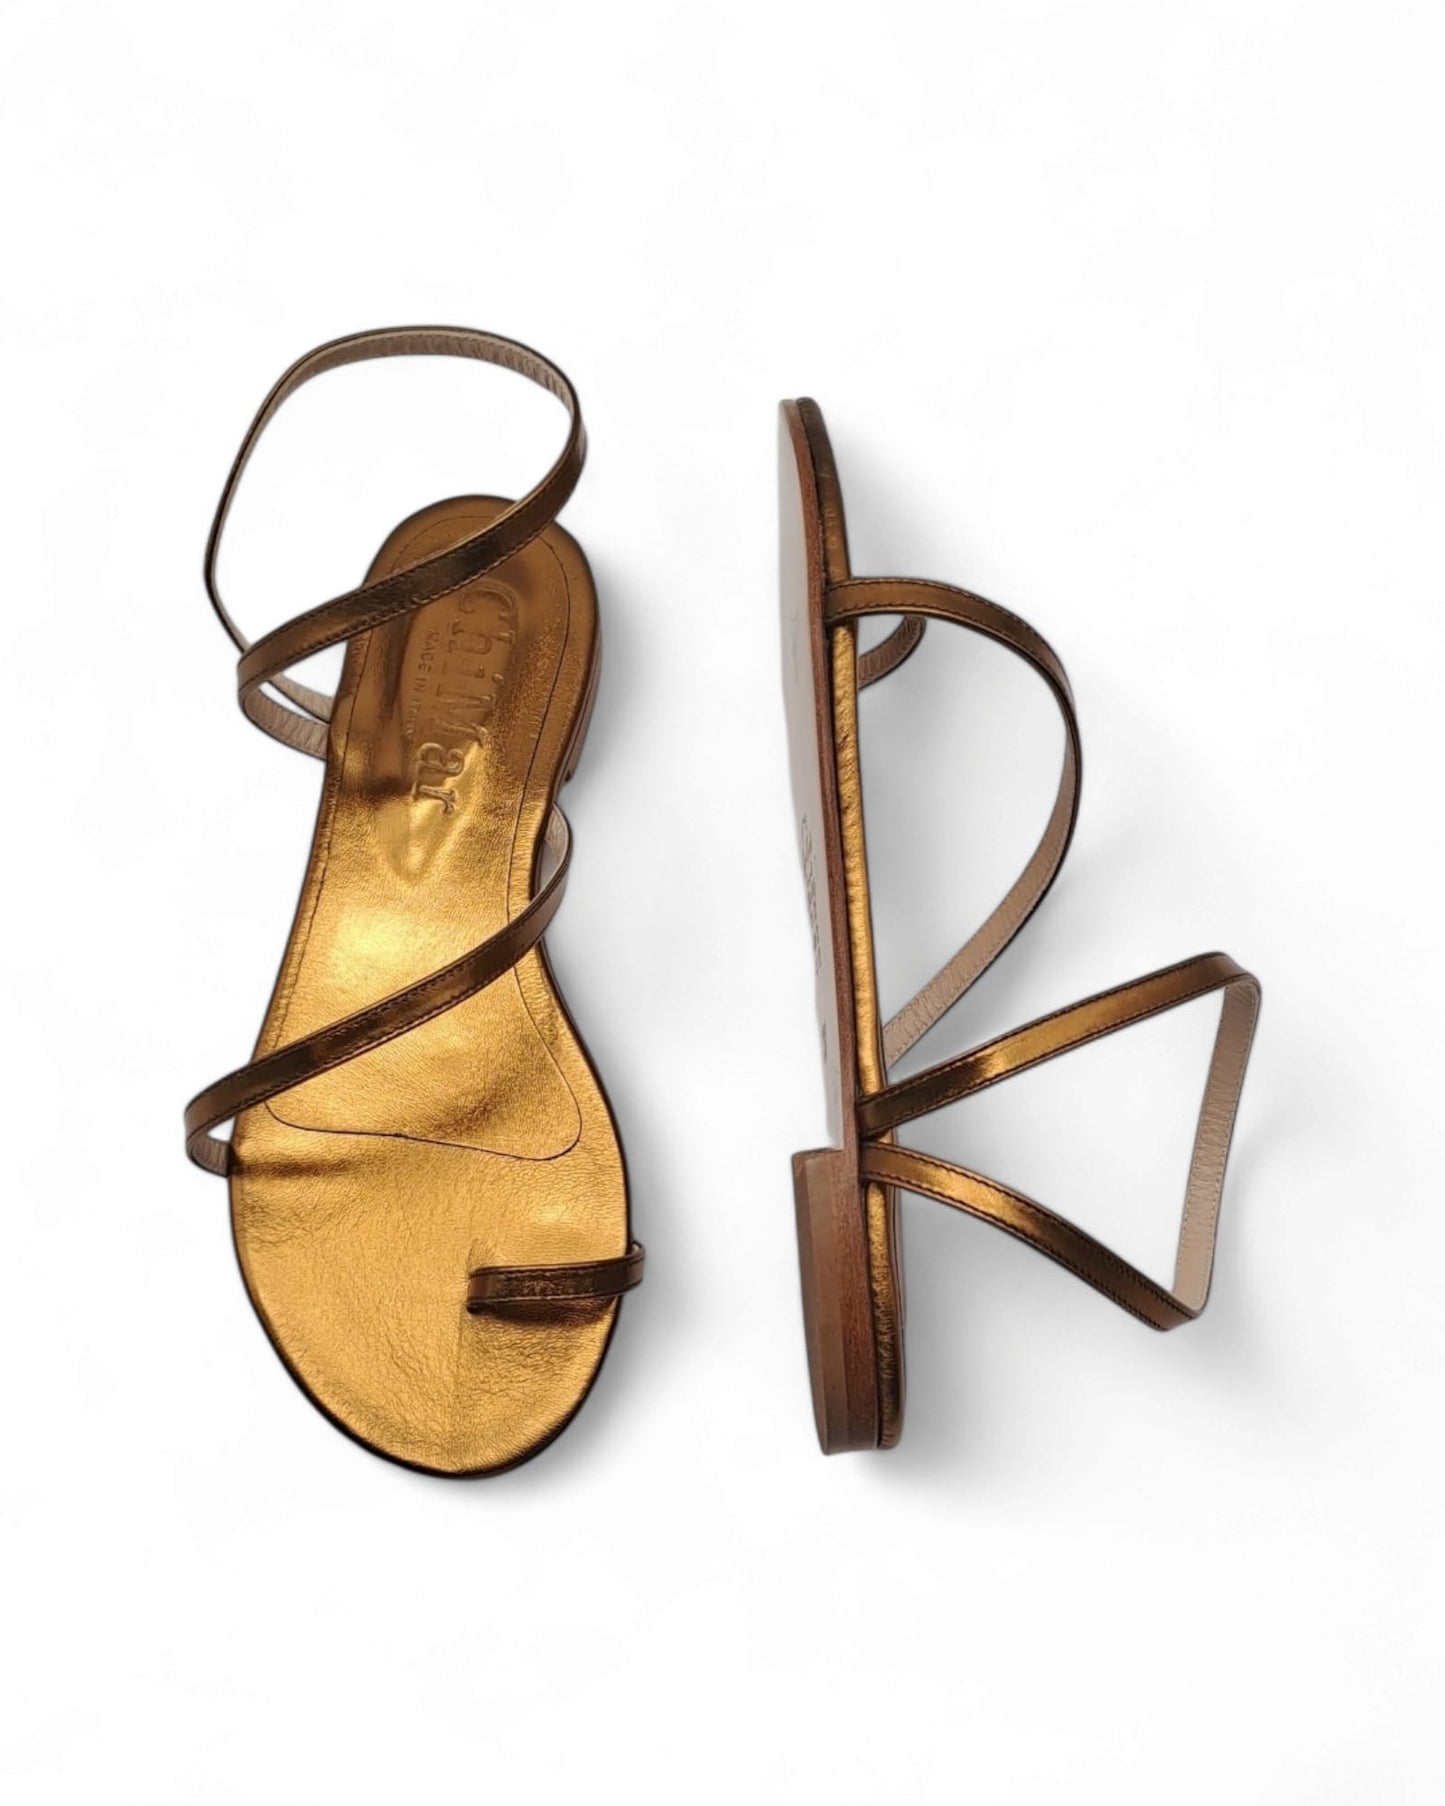 Bronze Laminated Sissi Sandal